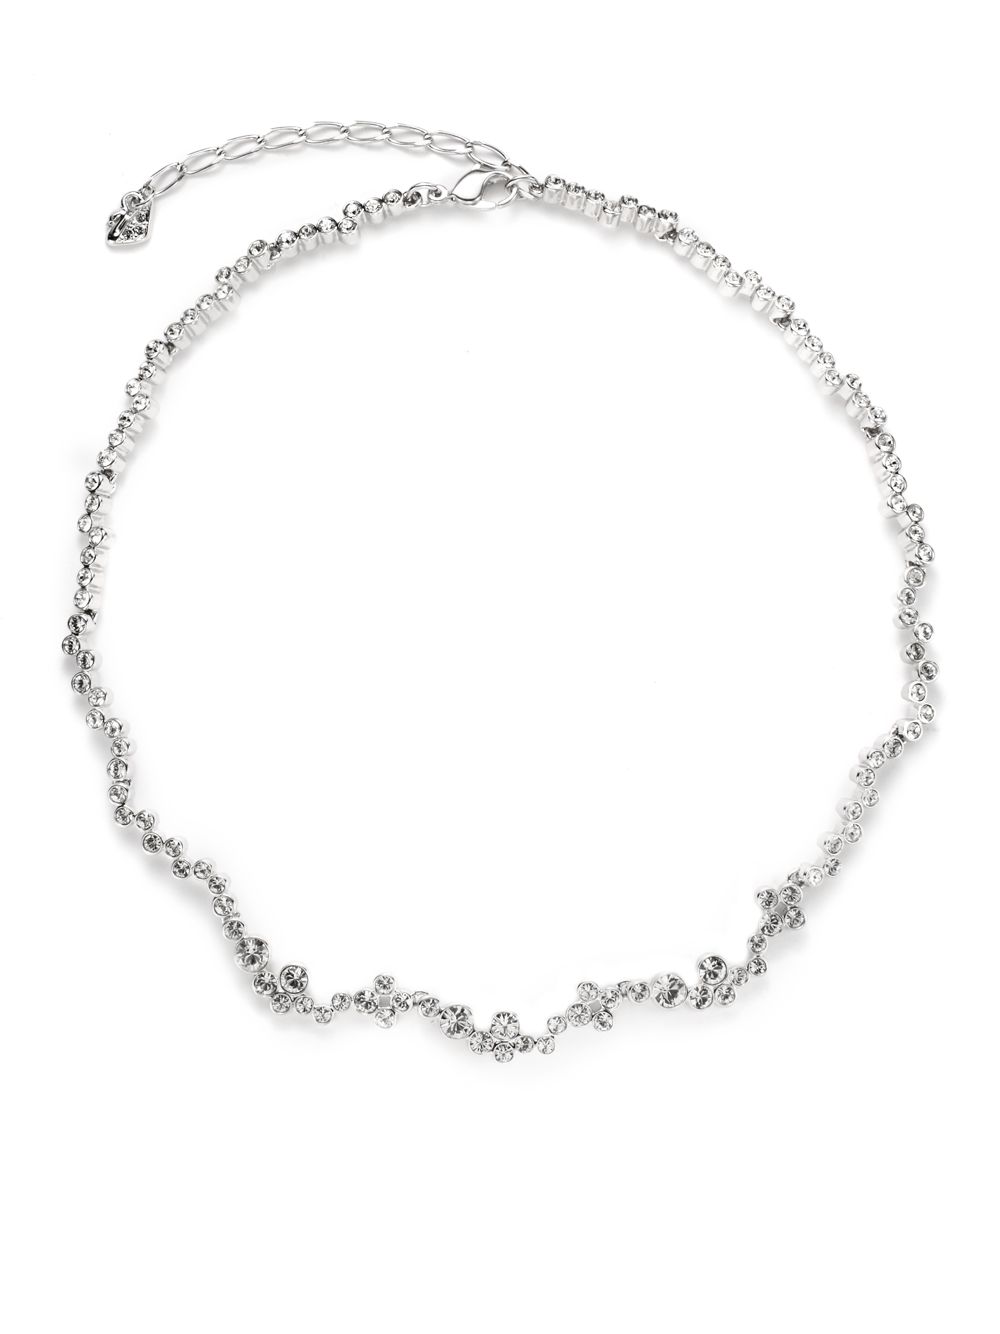 Lyst - Swarovski Sparkle Choker Necklace in Metallic